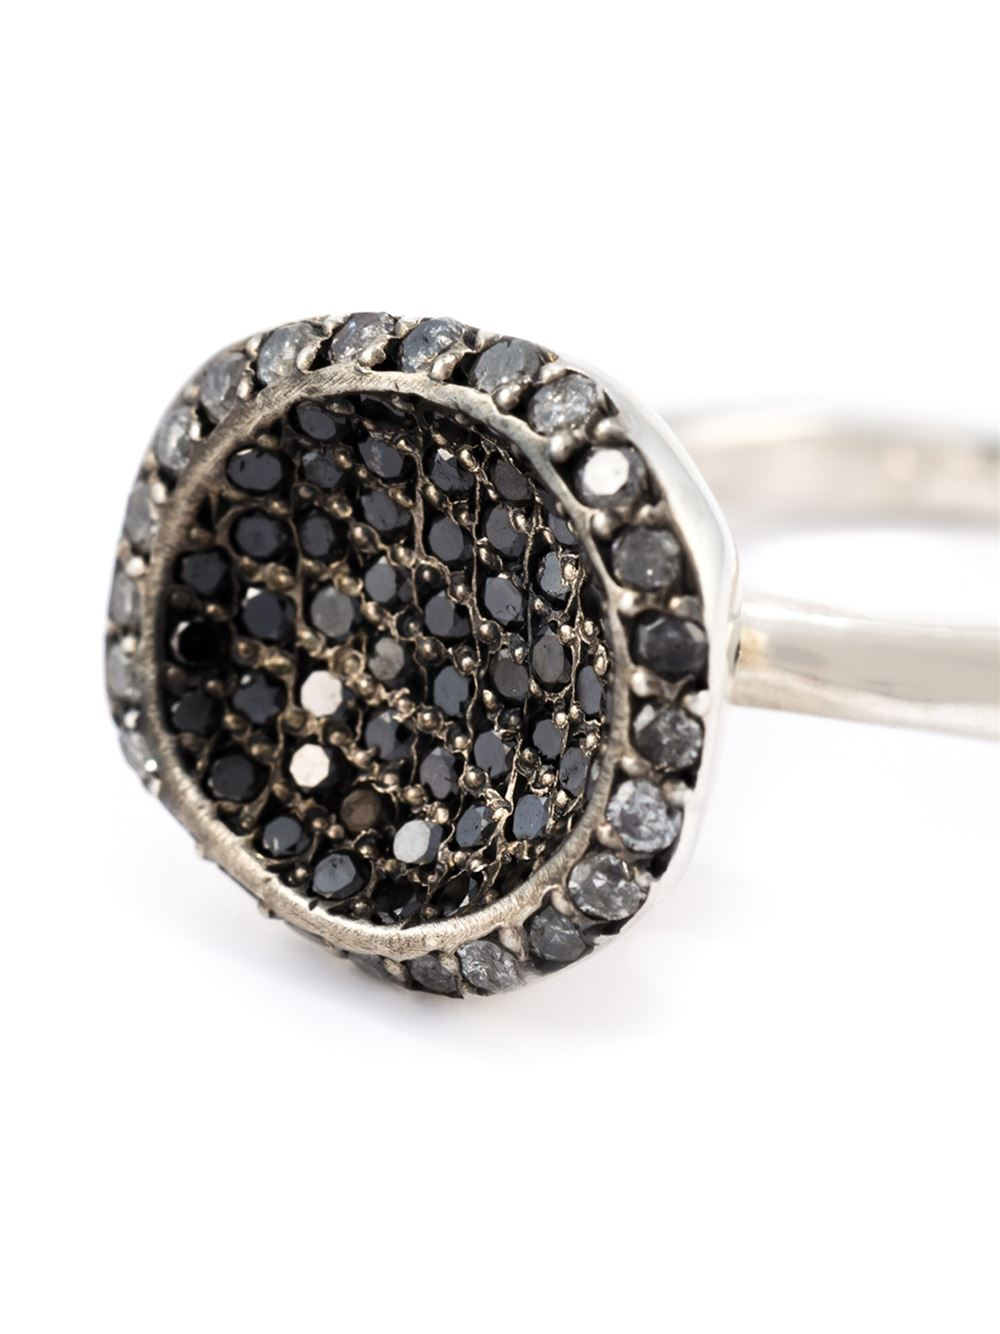 Lyst - Rosa Maria 'Begum' Ring in Metallic